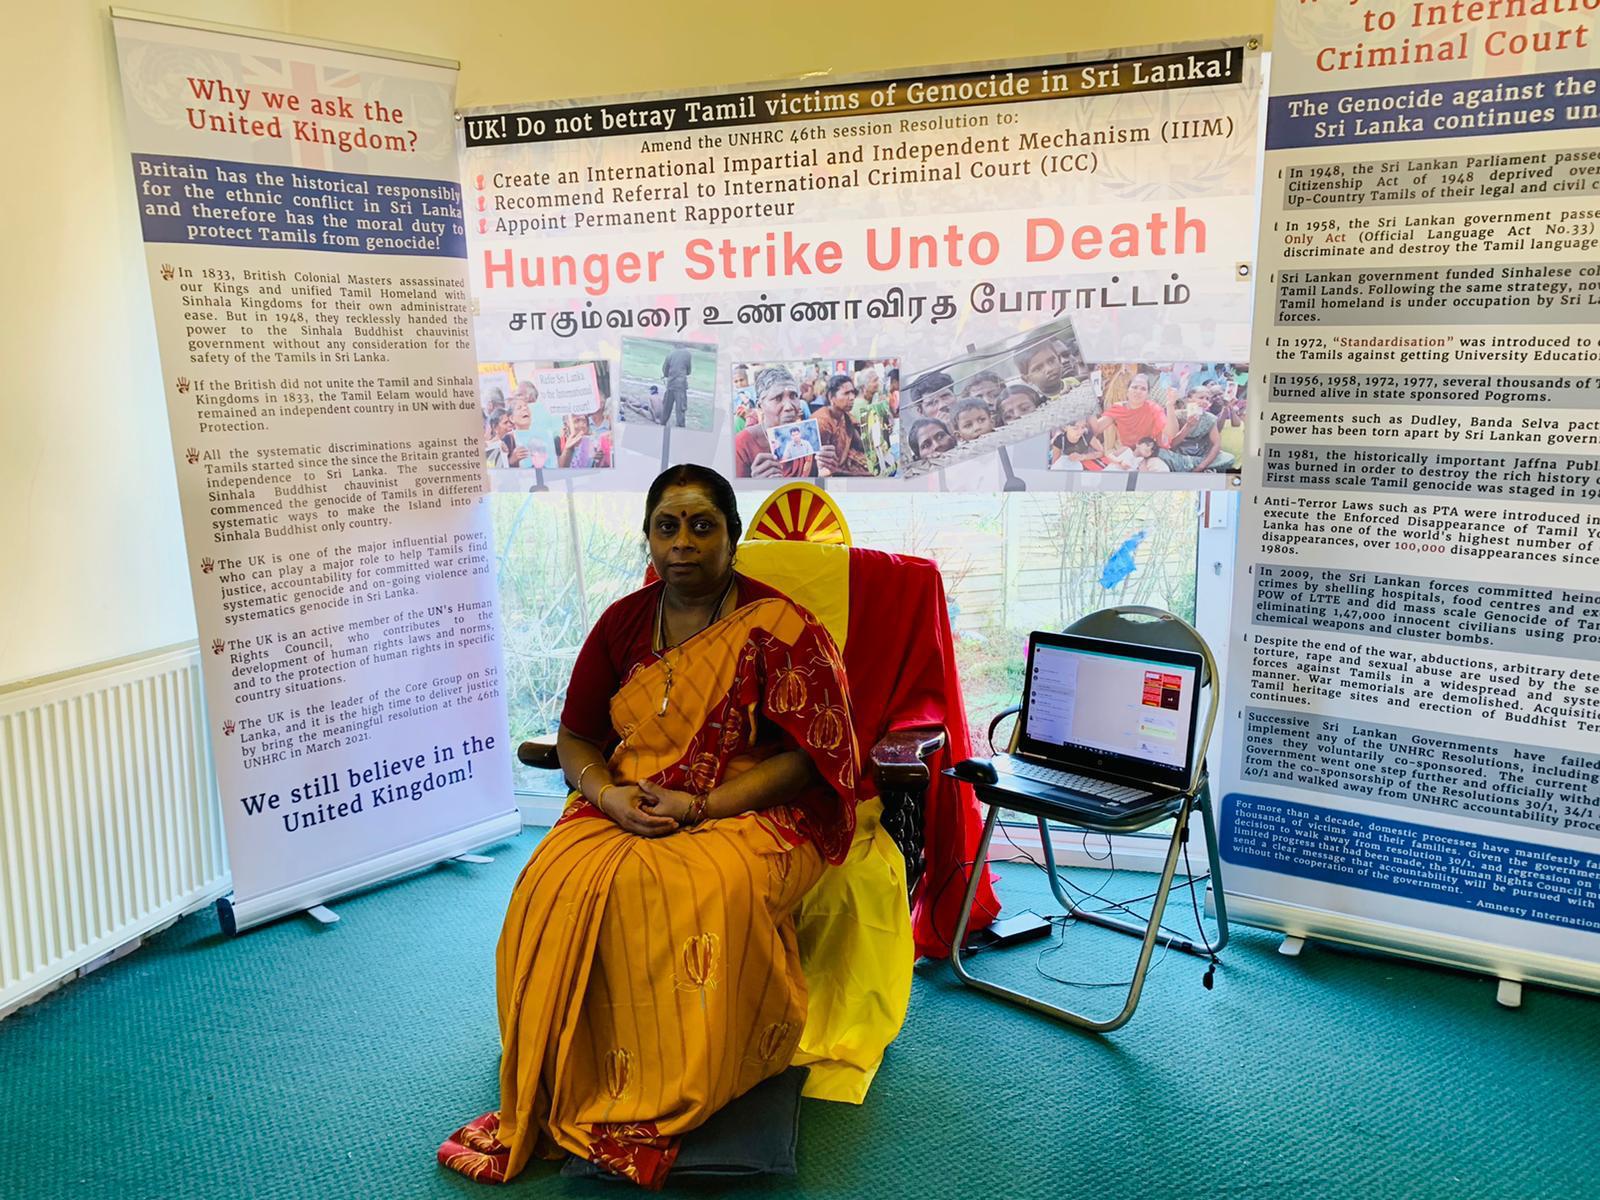 British Tamil woman commences hunger strike demanding Sri La